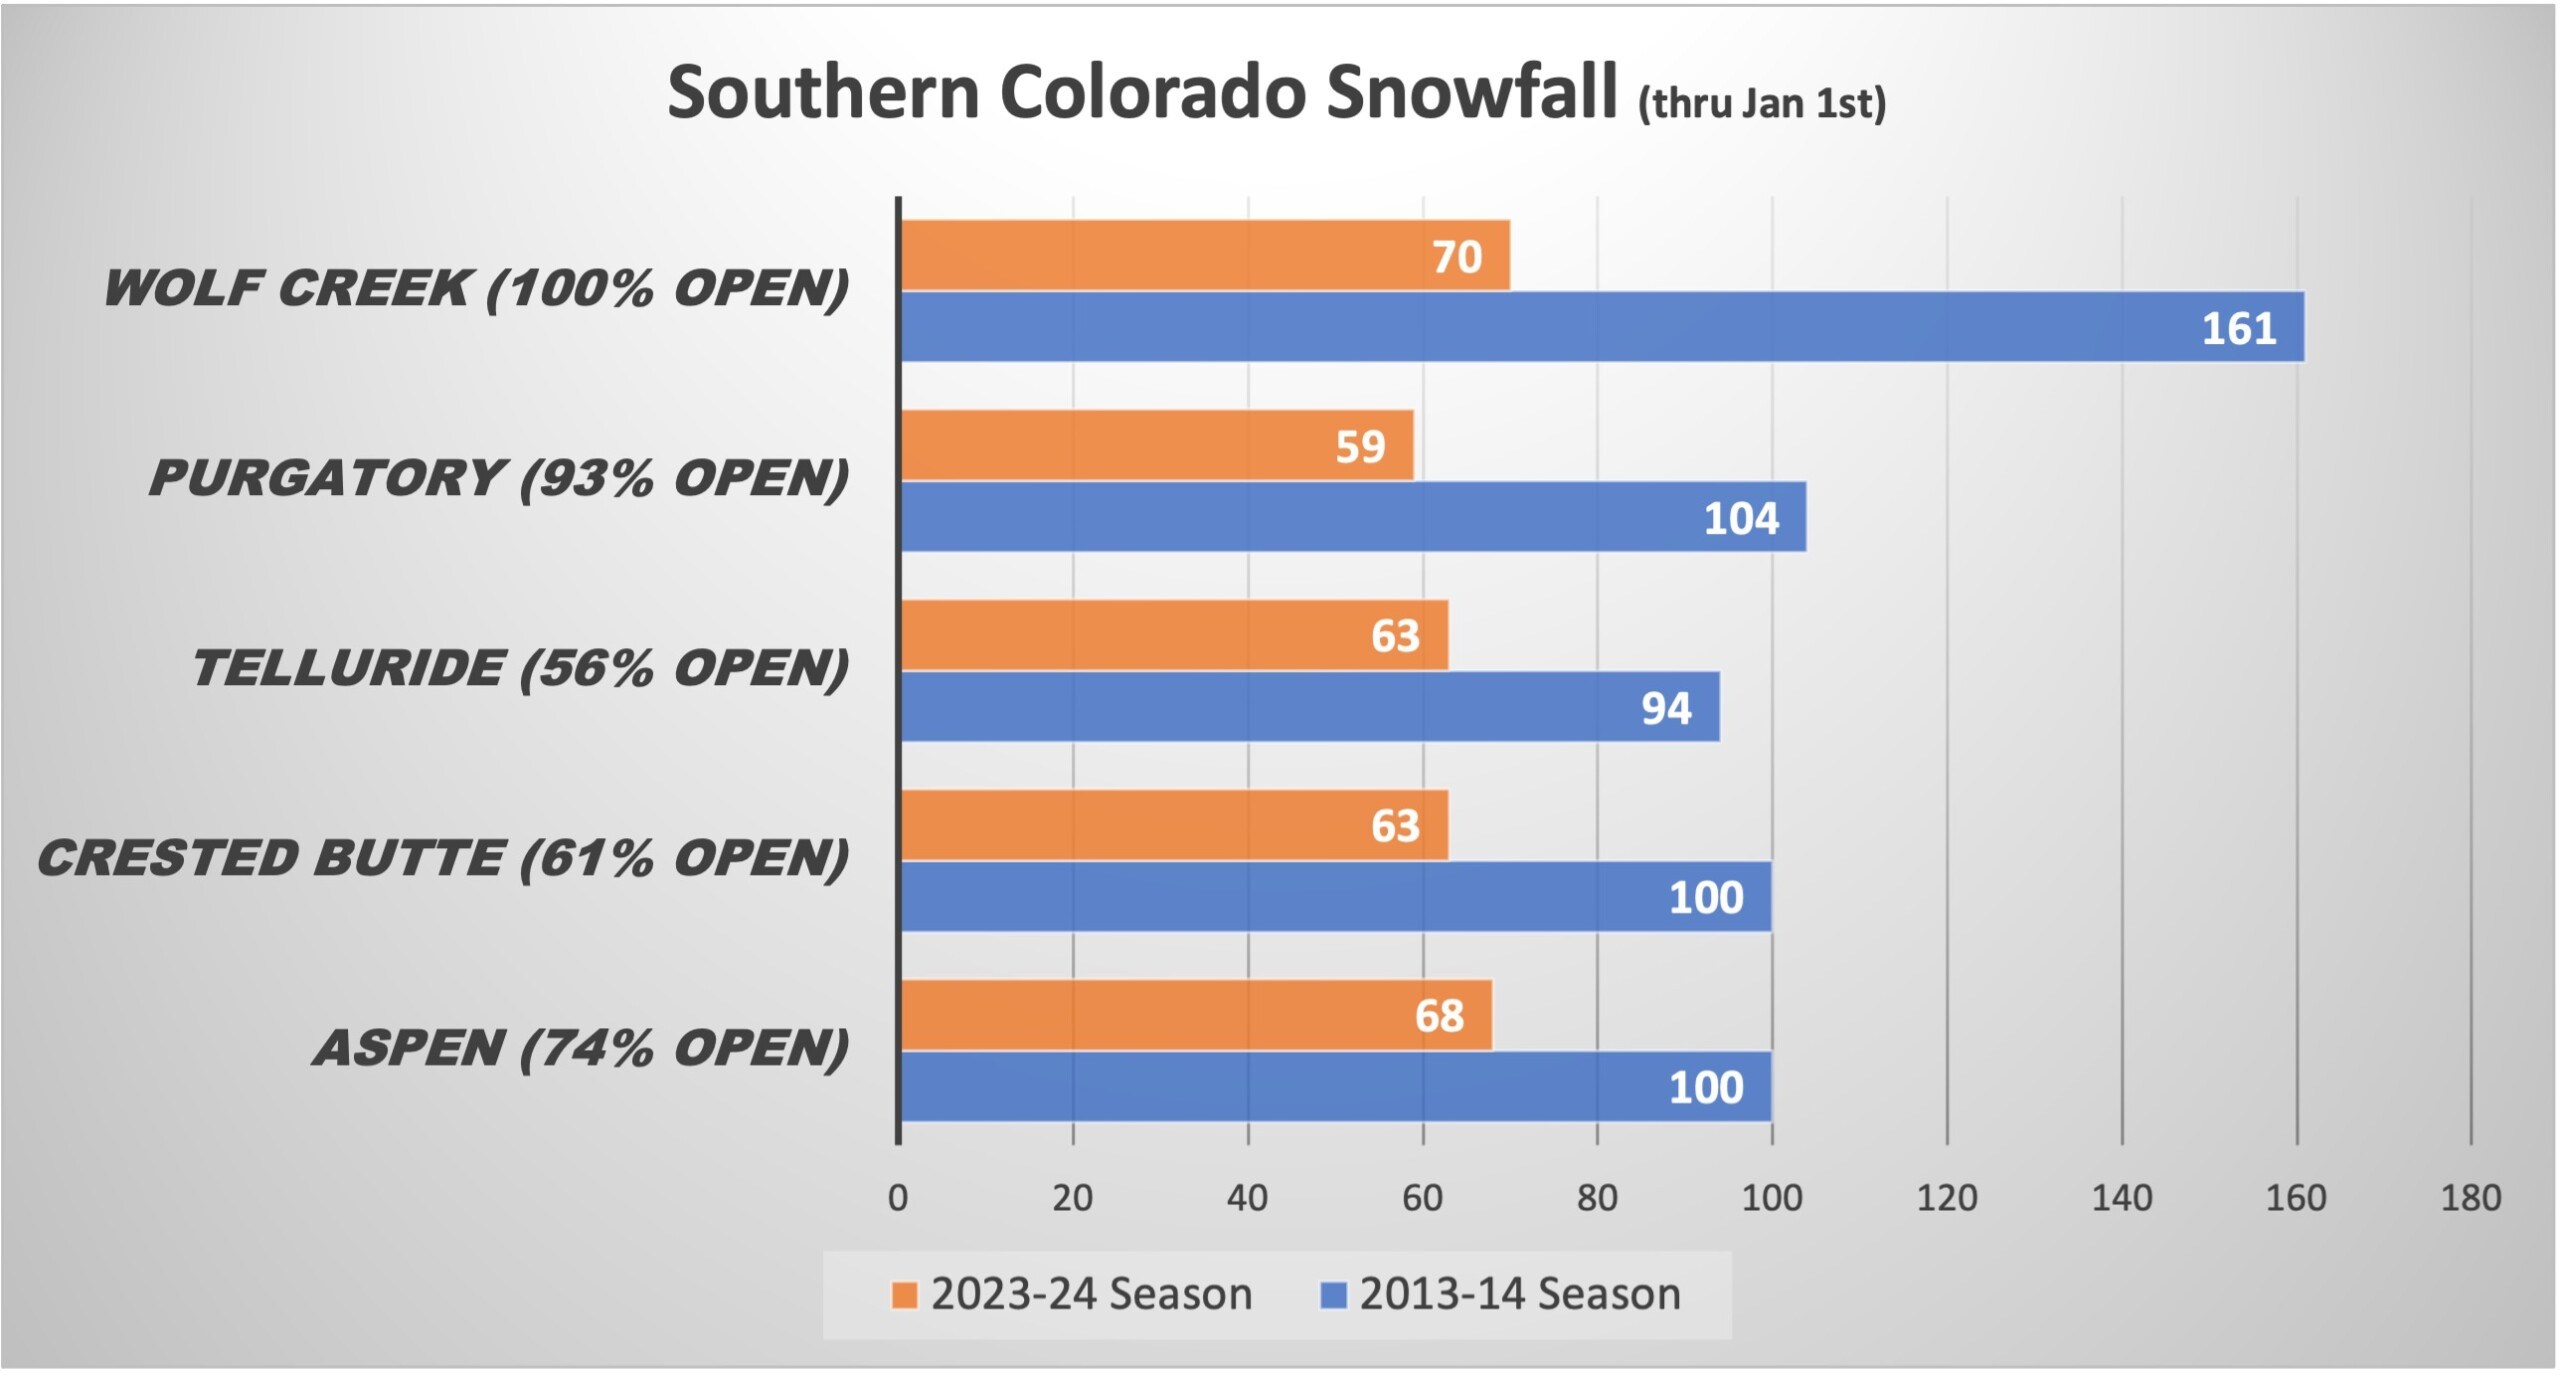 2023/24 Southern Colorado Ski Season Compare to 2013/14 ski season